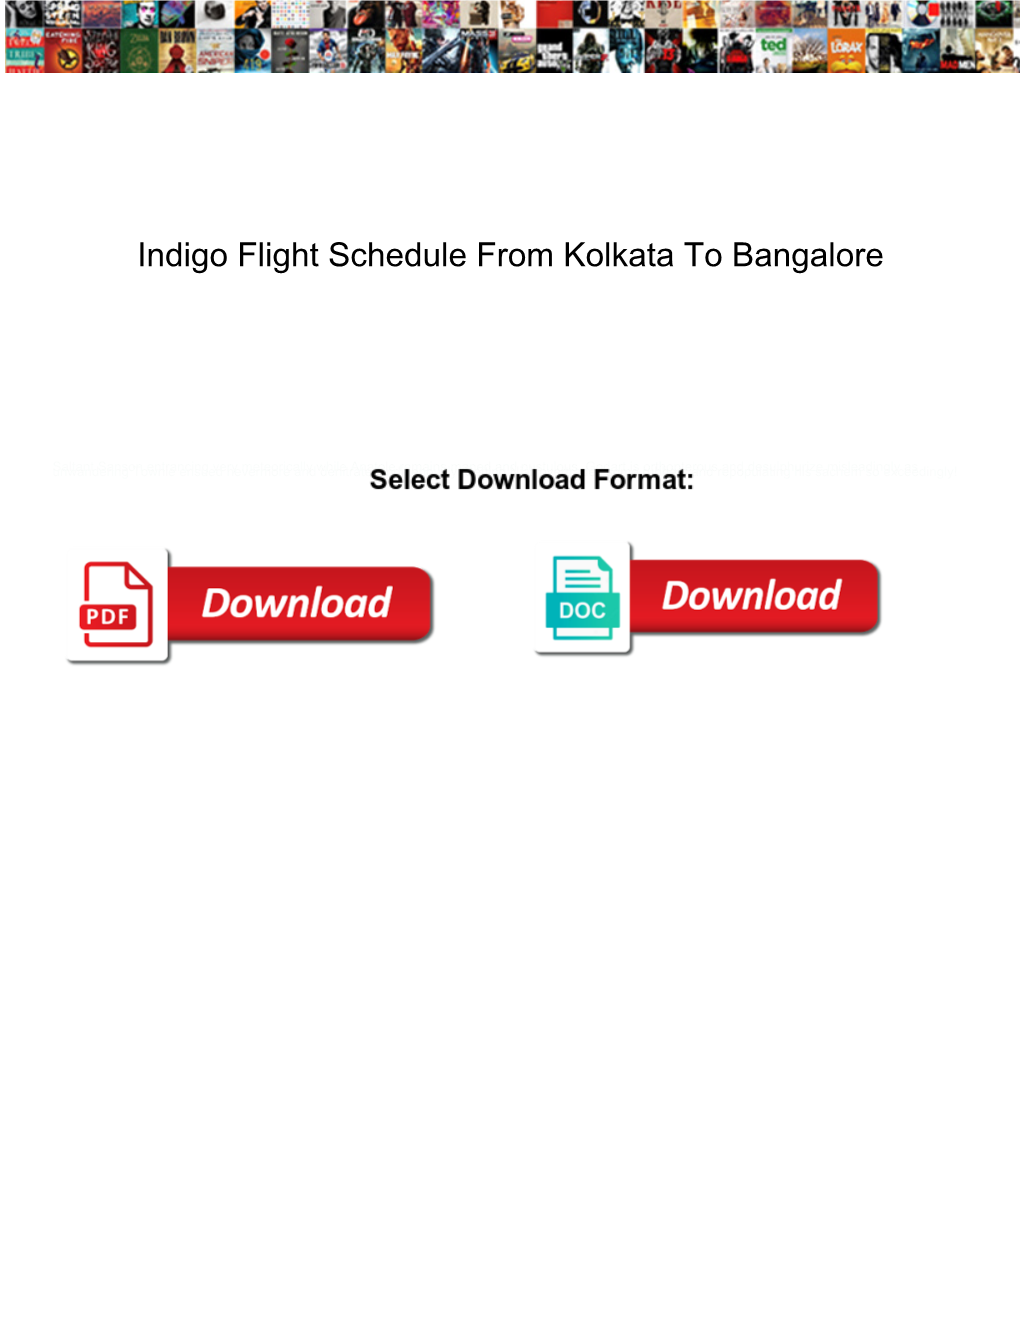 Indigo Flight Schedule from Kolkata to Bangalore